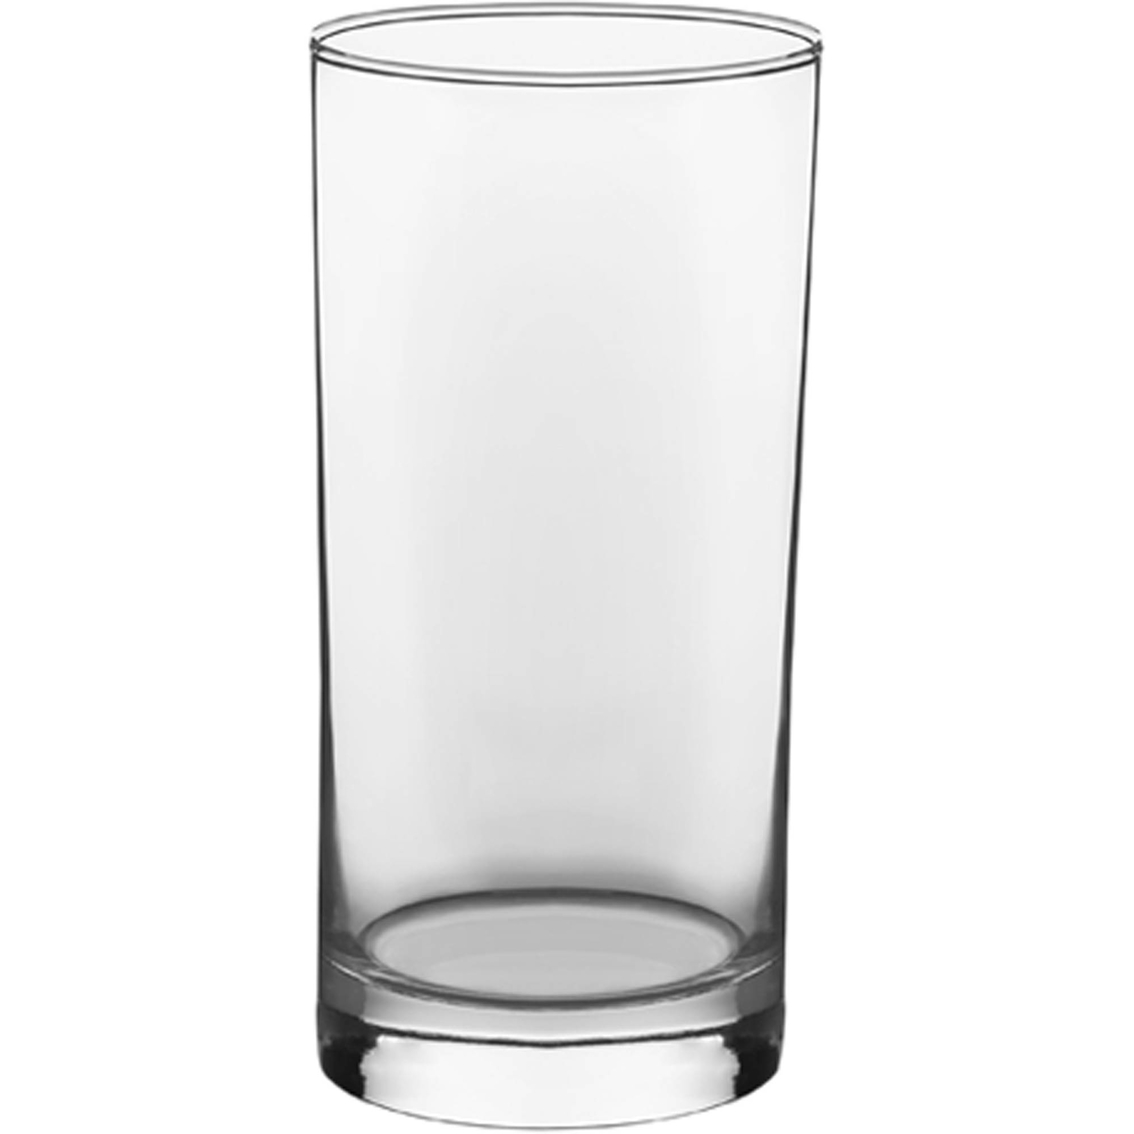 MOOWI Water Glasses 300ml Cute Drinking Glasses